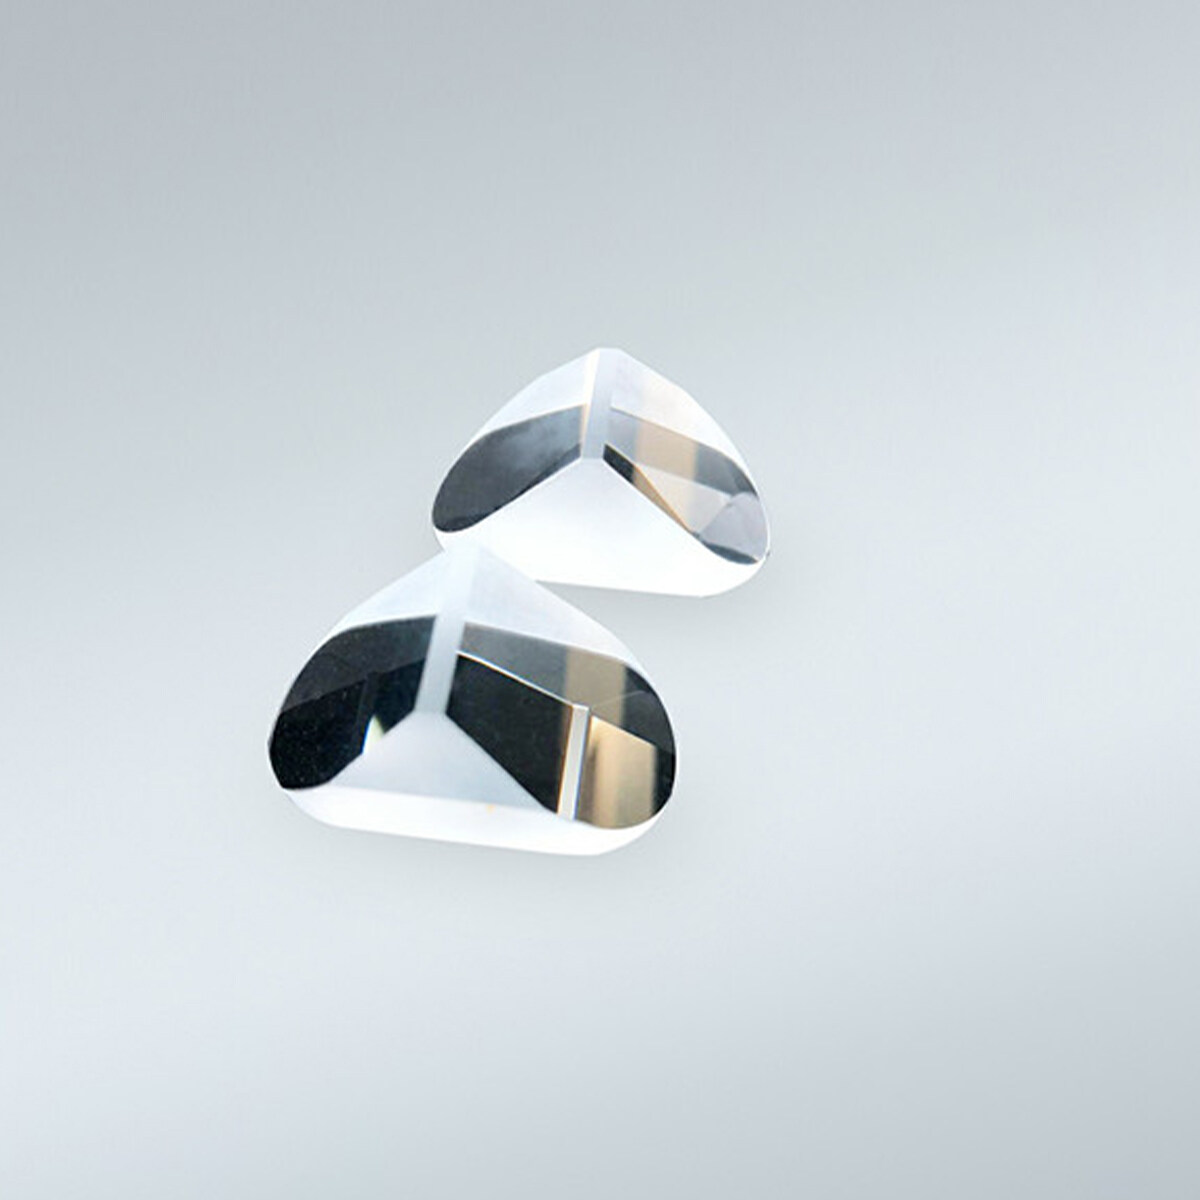 porro prism design, optical glass wholesale, prism merchandising company